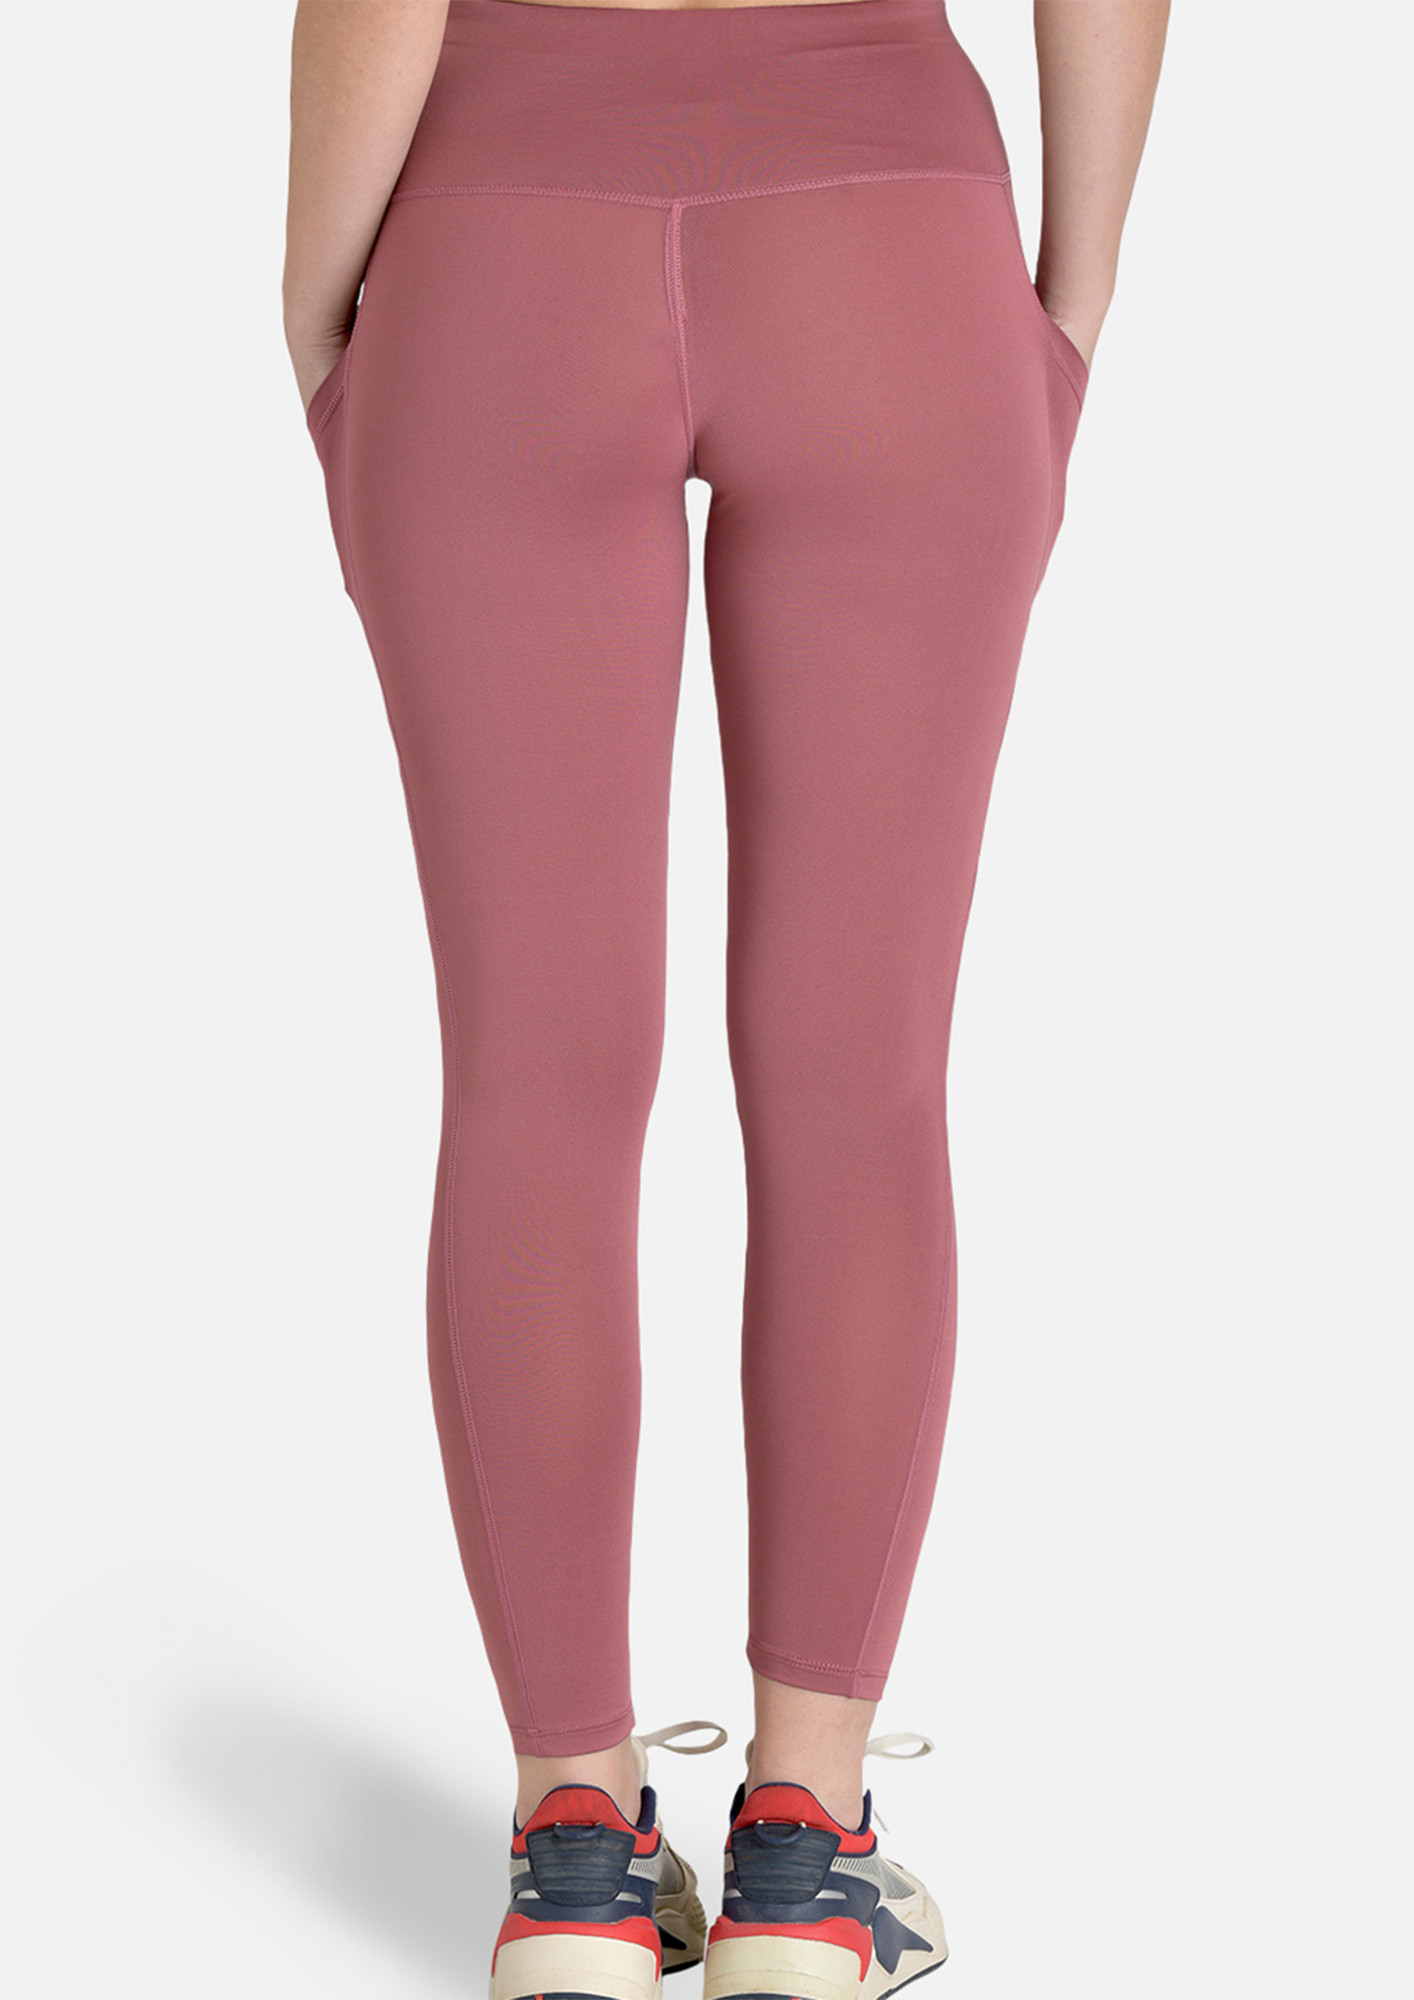 Plain Cotton Ladies Leggings (Pink) XL SEPX9037 in Dandeli at best